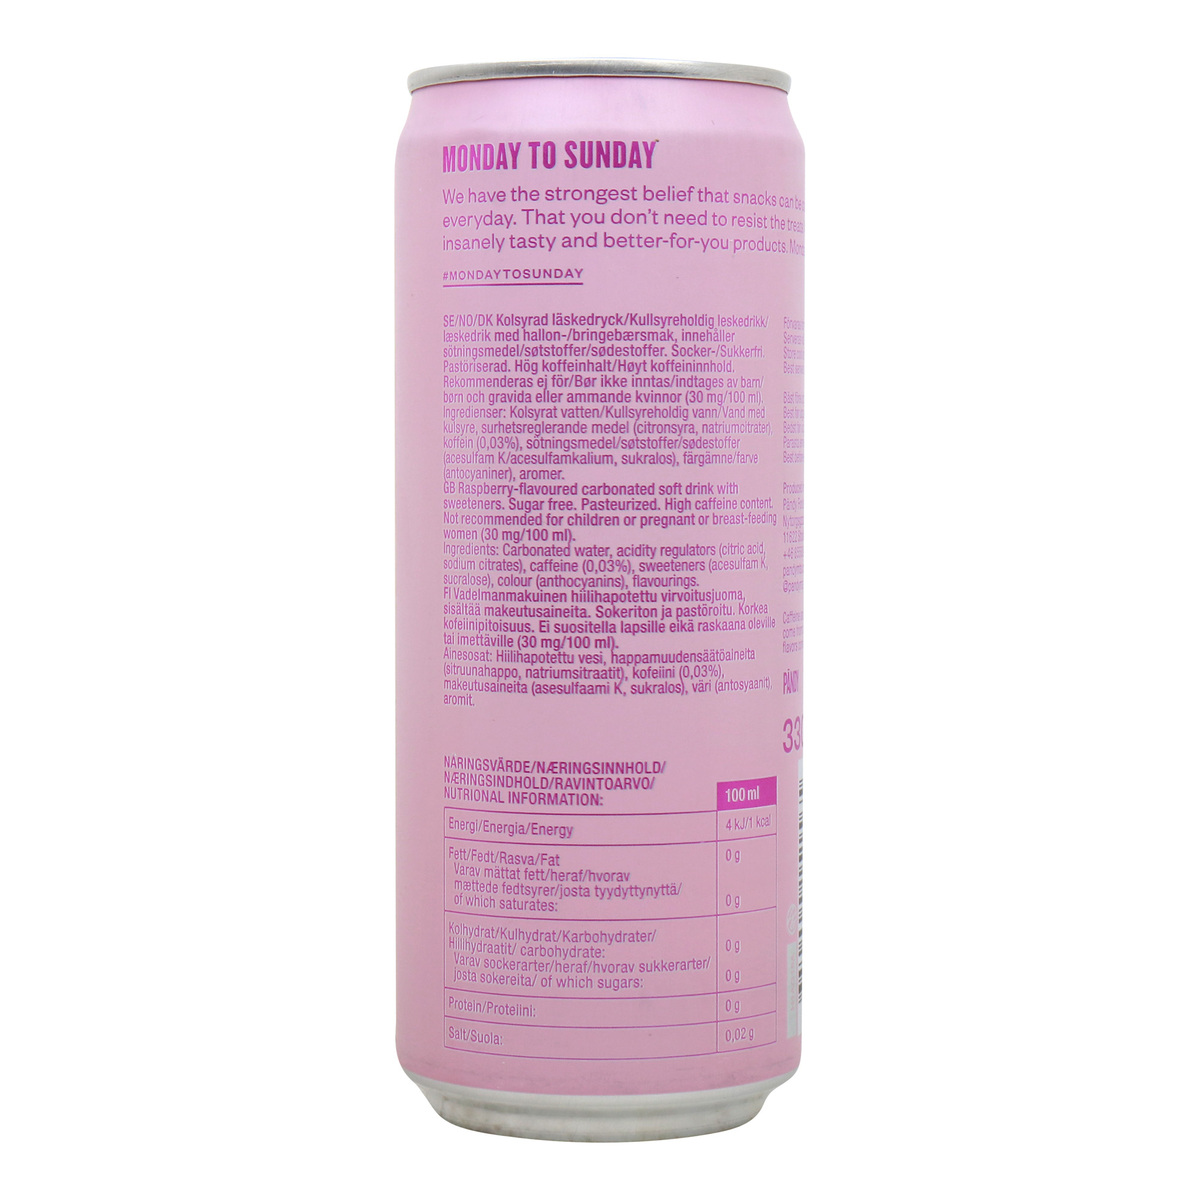 Pandy Zero Raspberry Energy Drink 330 ml